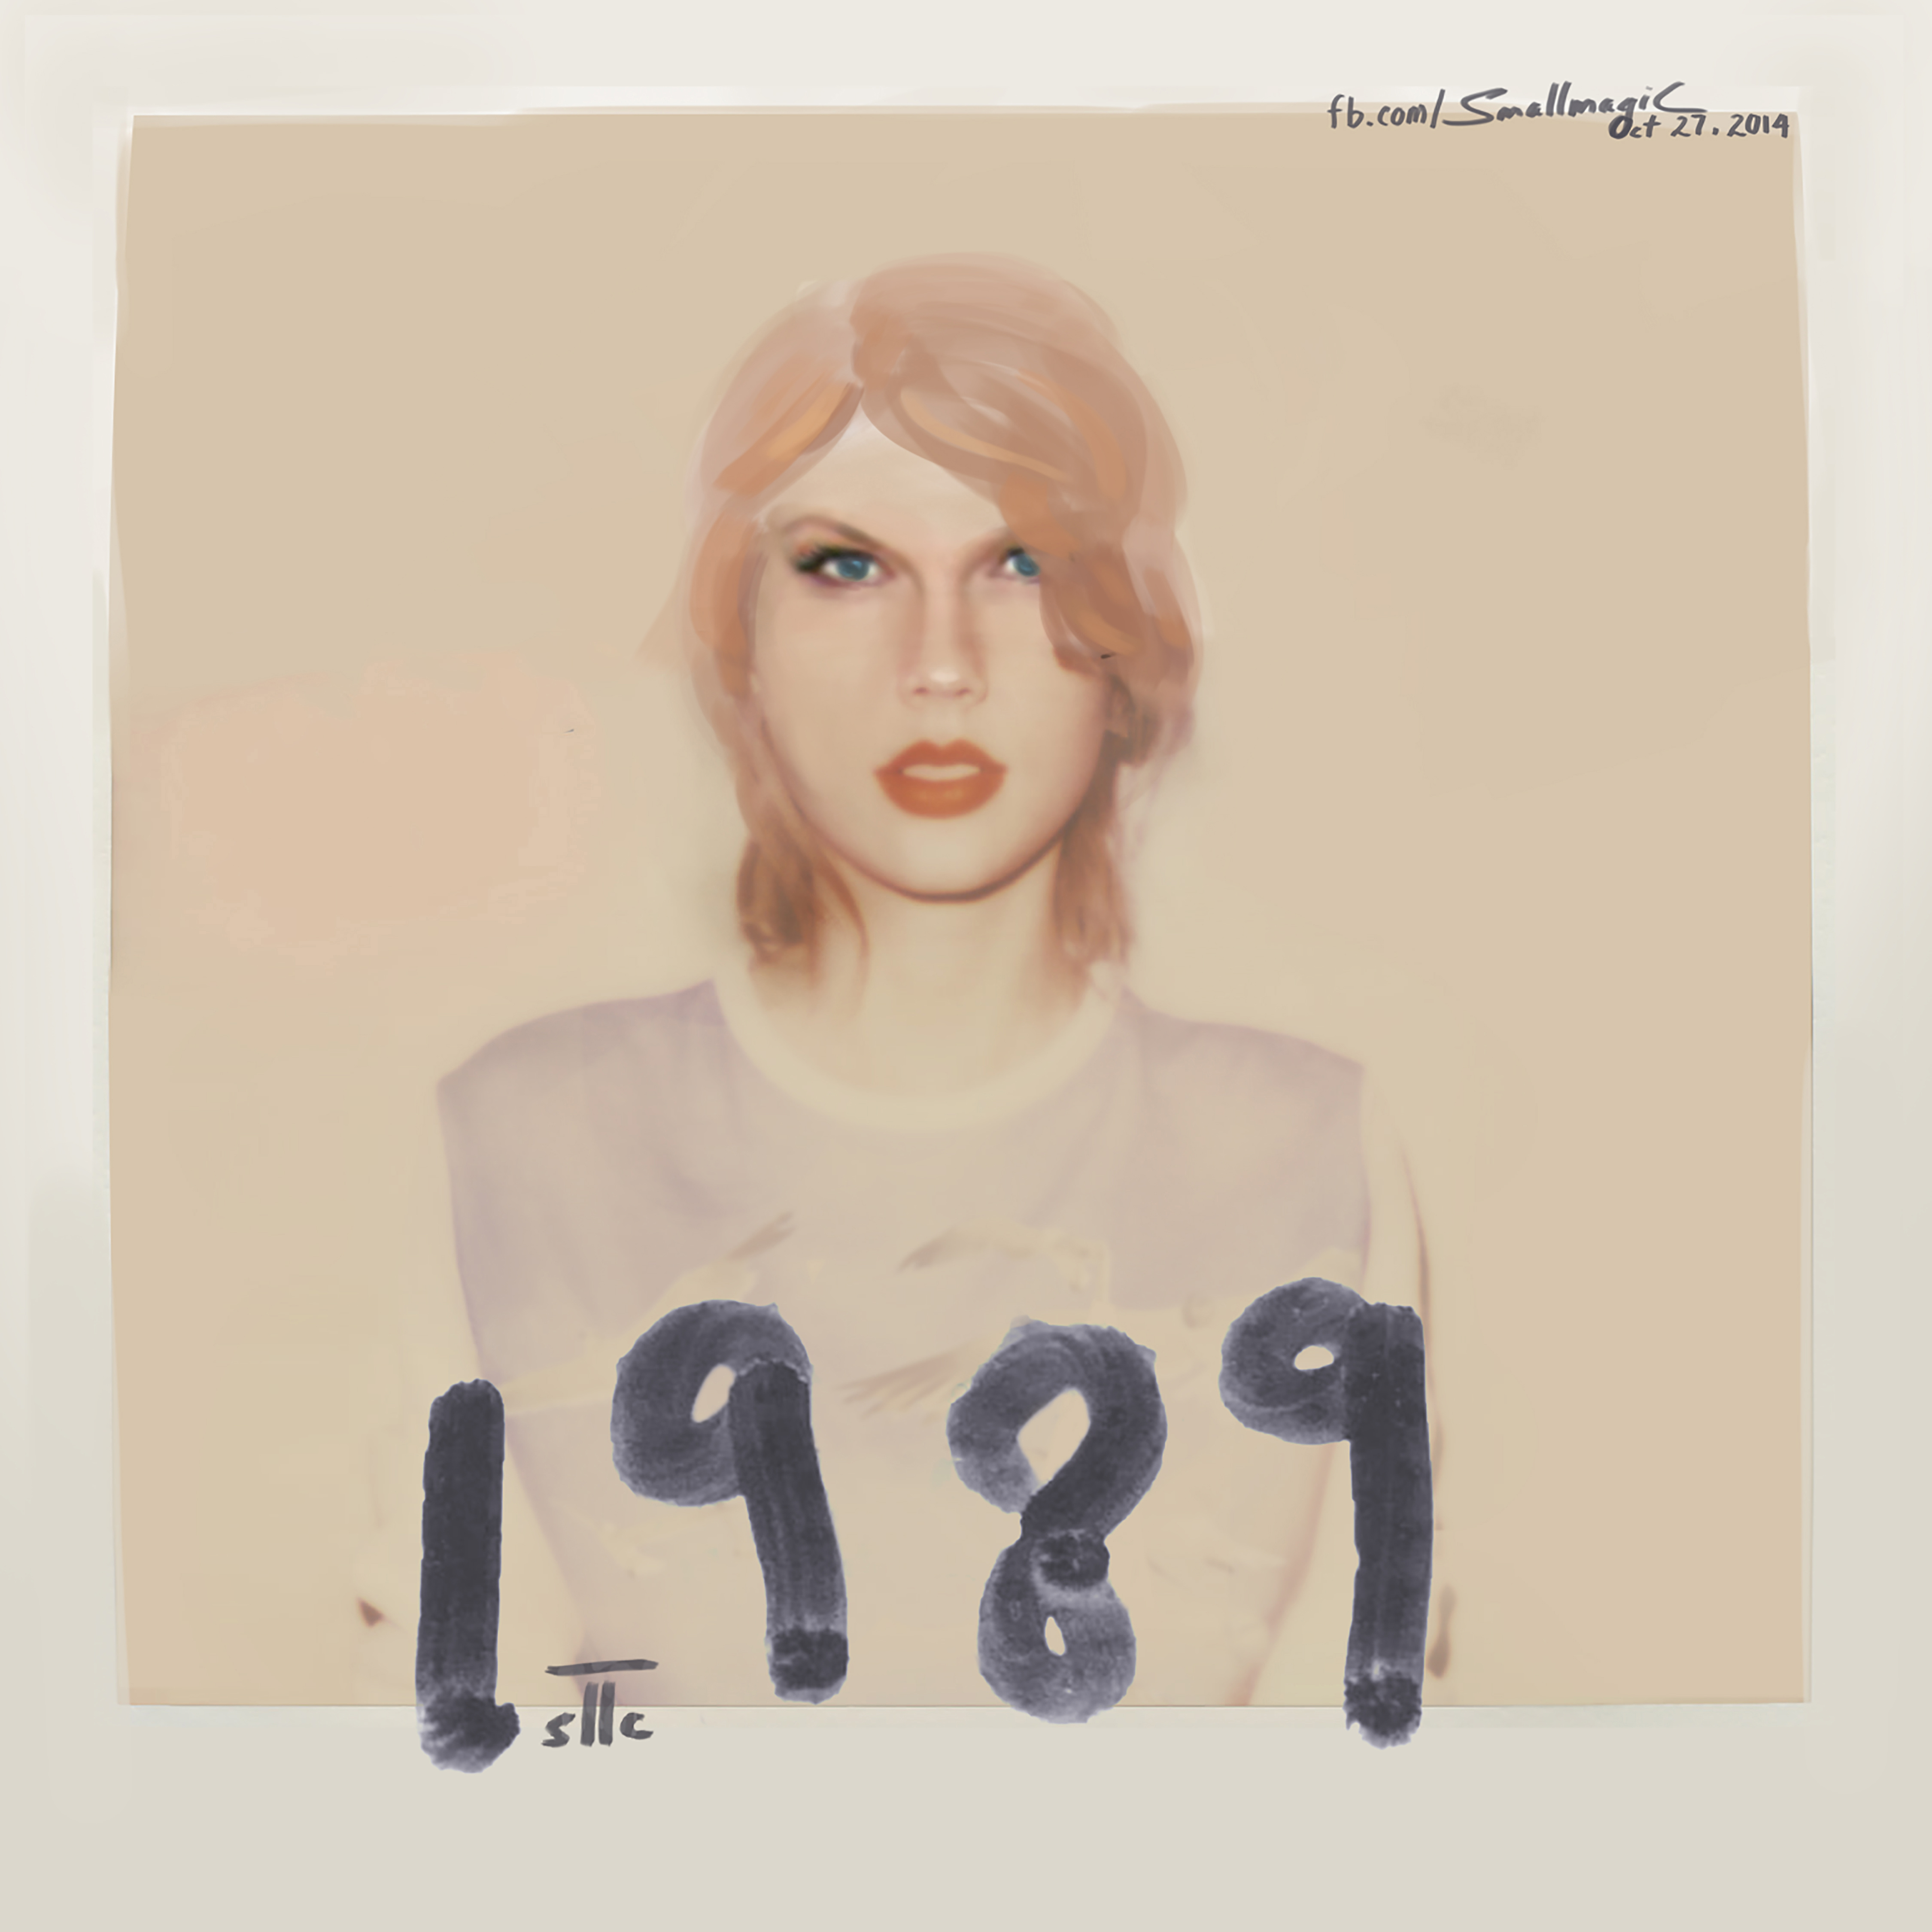 Taylor Swift - 1989 By Smallmagic On Deviantart